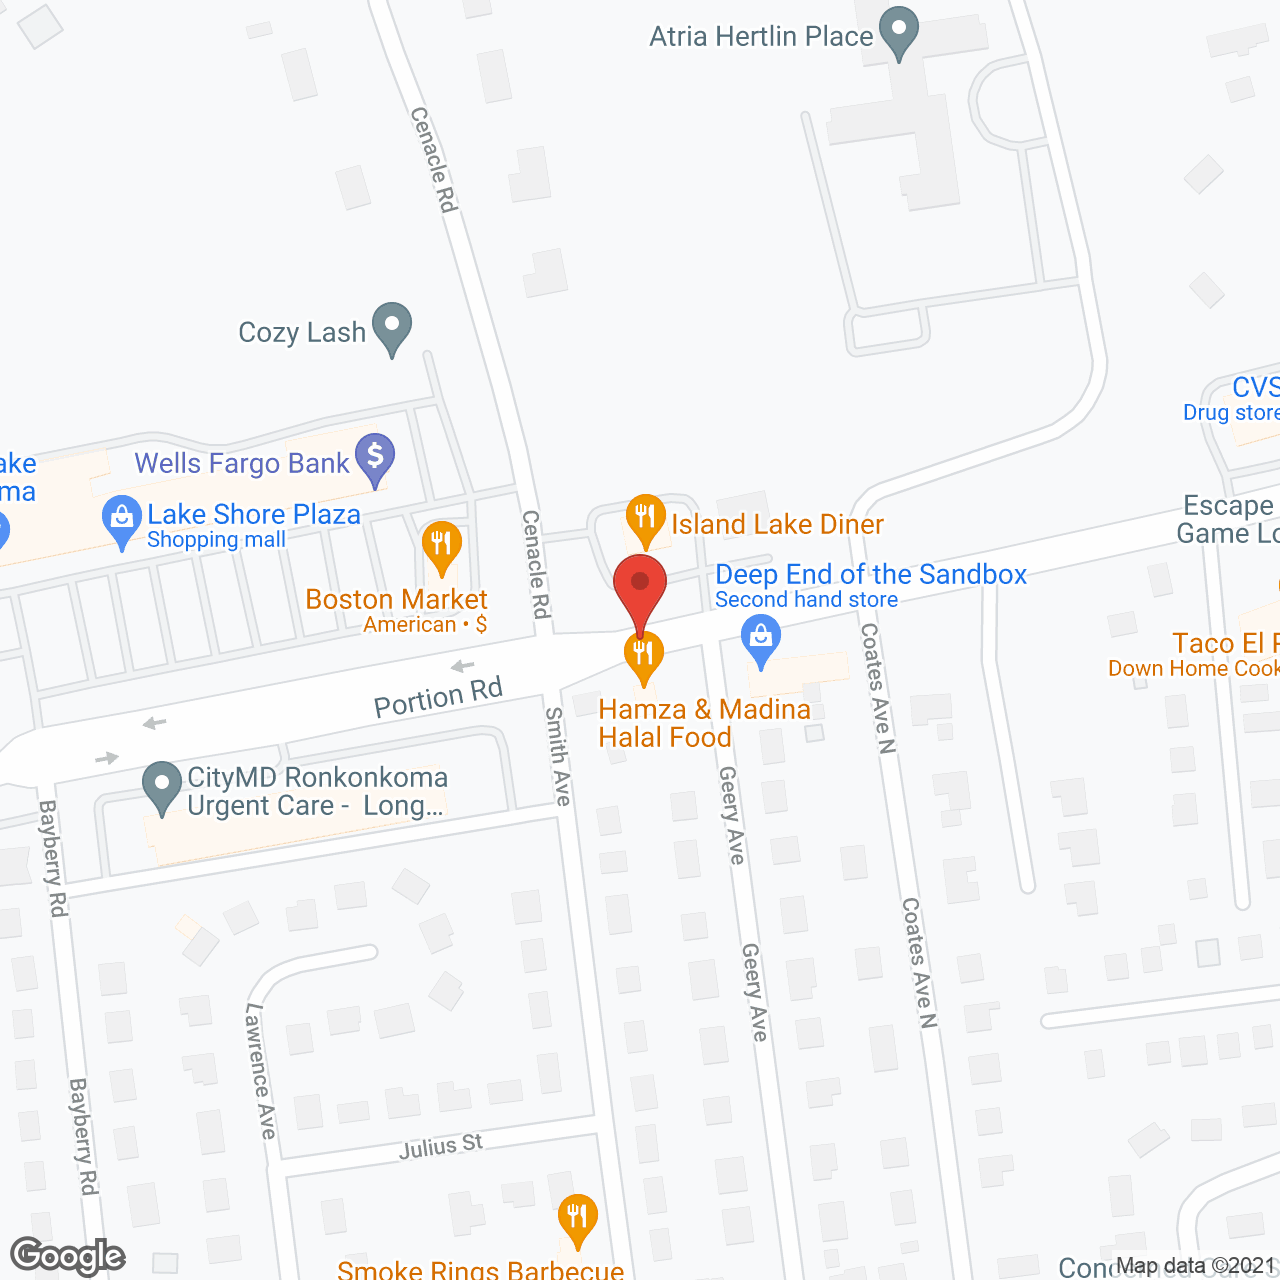 Atria Hertlin Place in google map